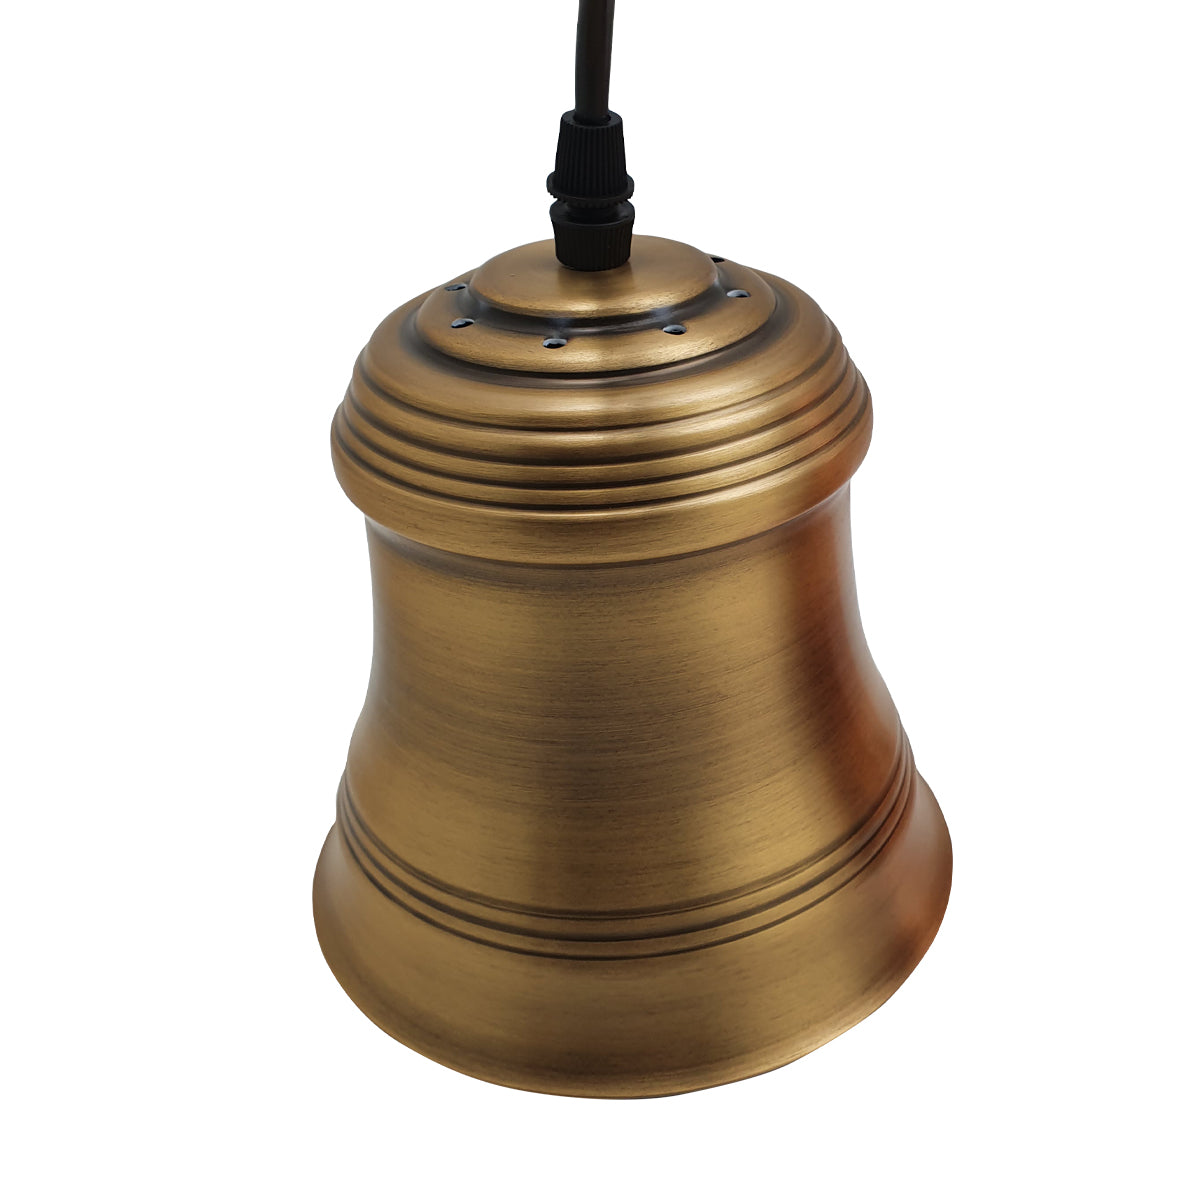 LEDSone industrial vintage Retro Style Pendant Light Yellow Brass Colours Lamp Shade~2535 - LEDSone UK Ltd